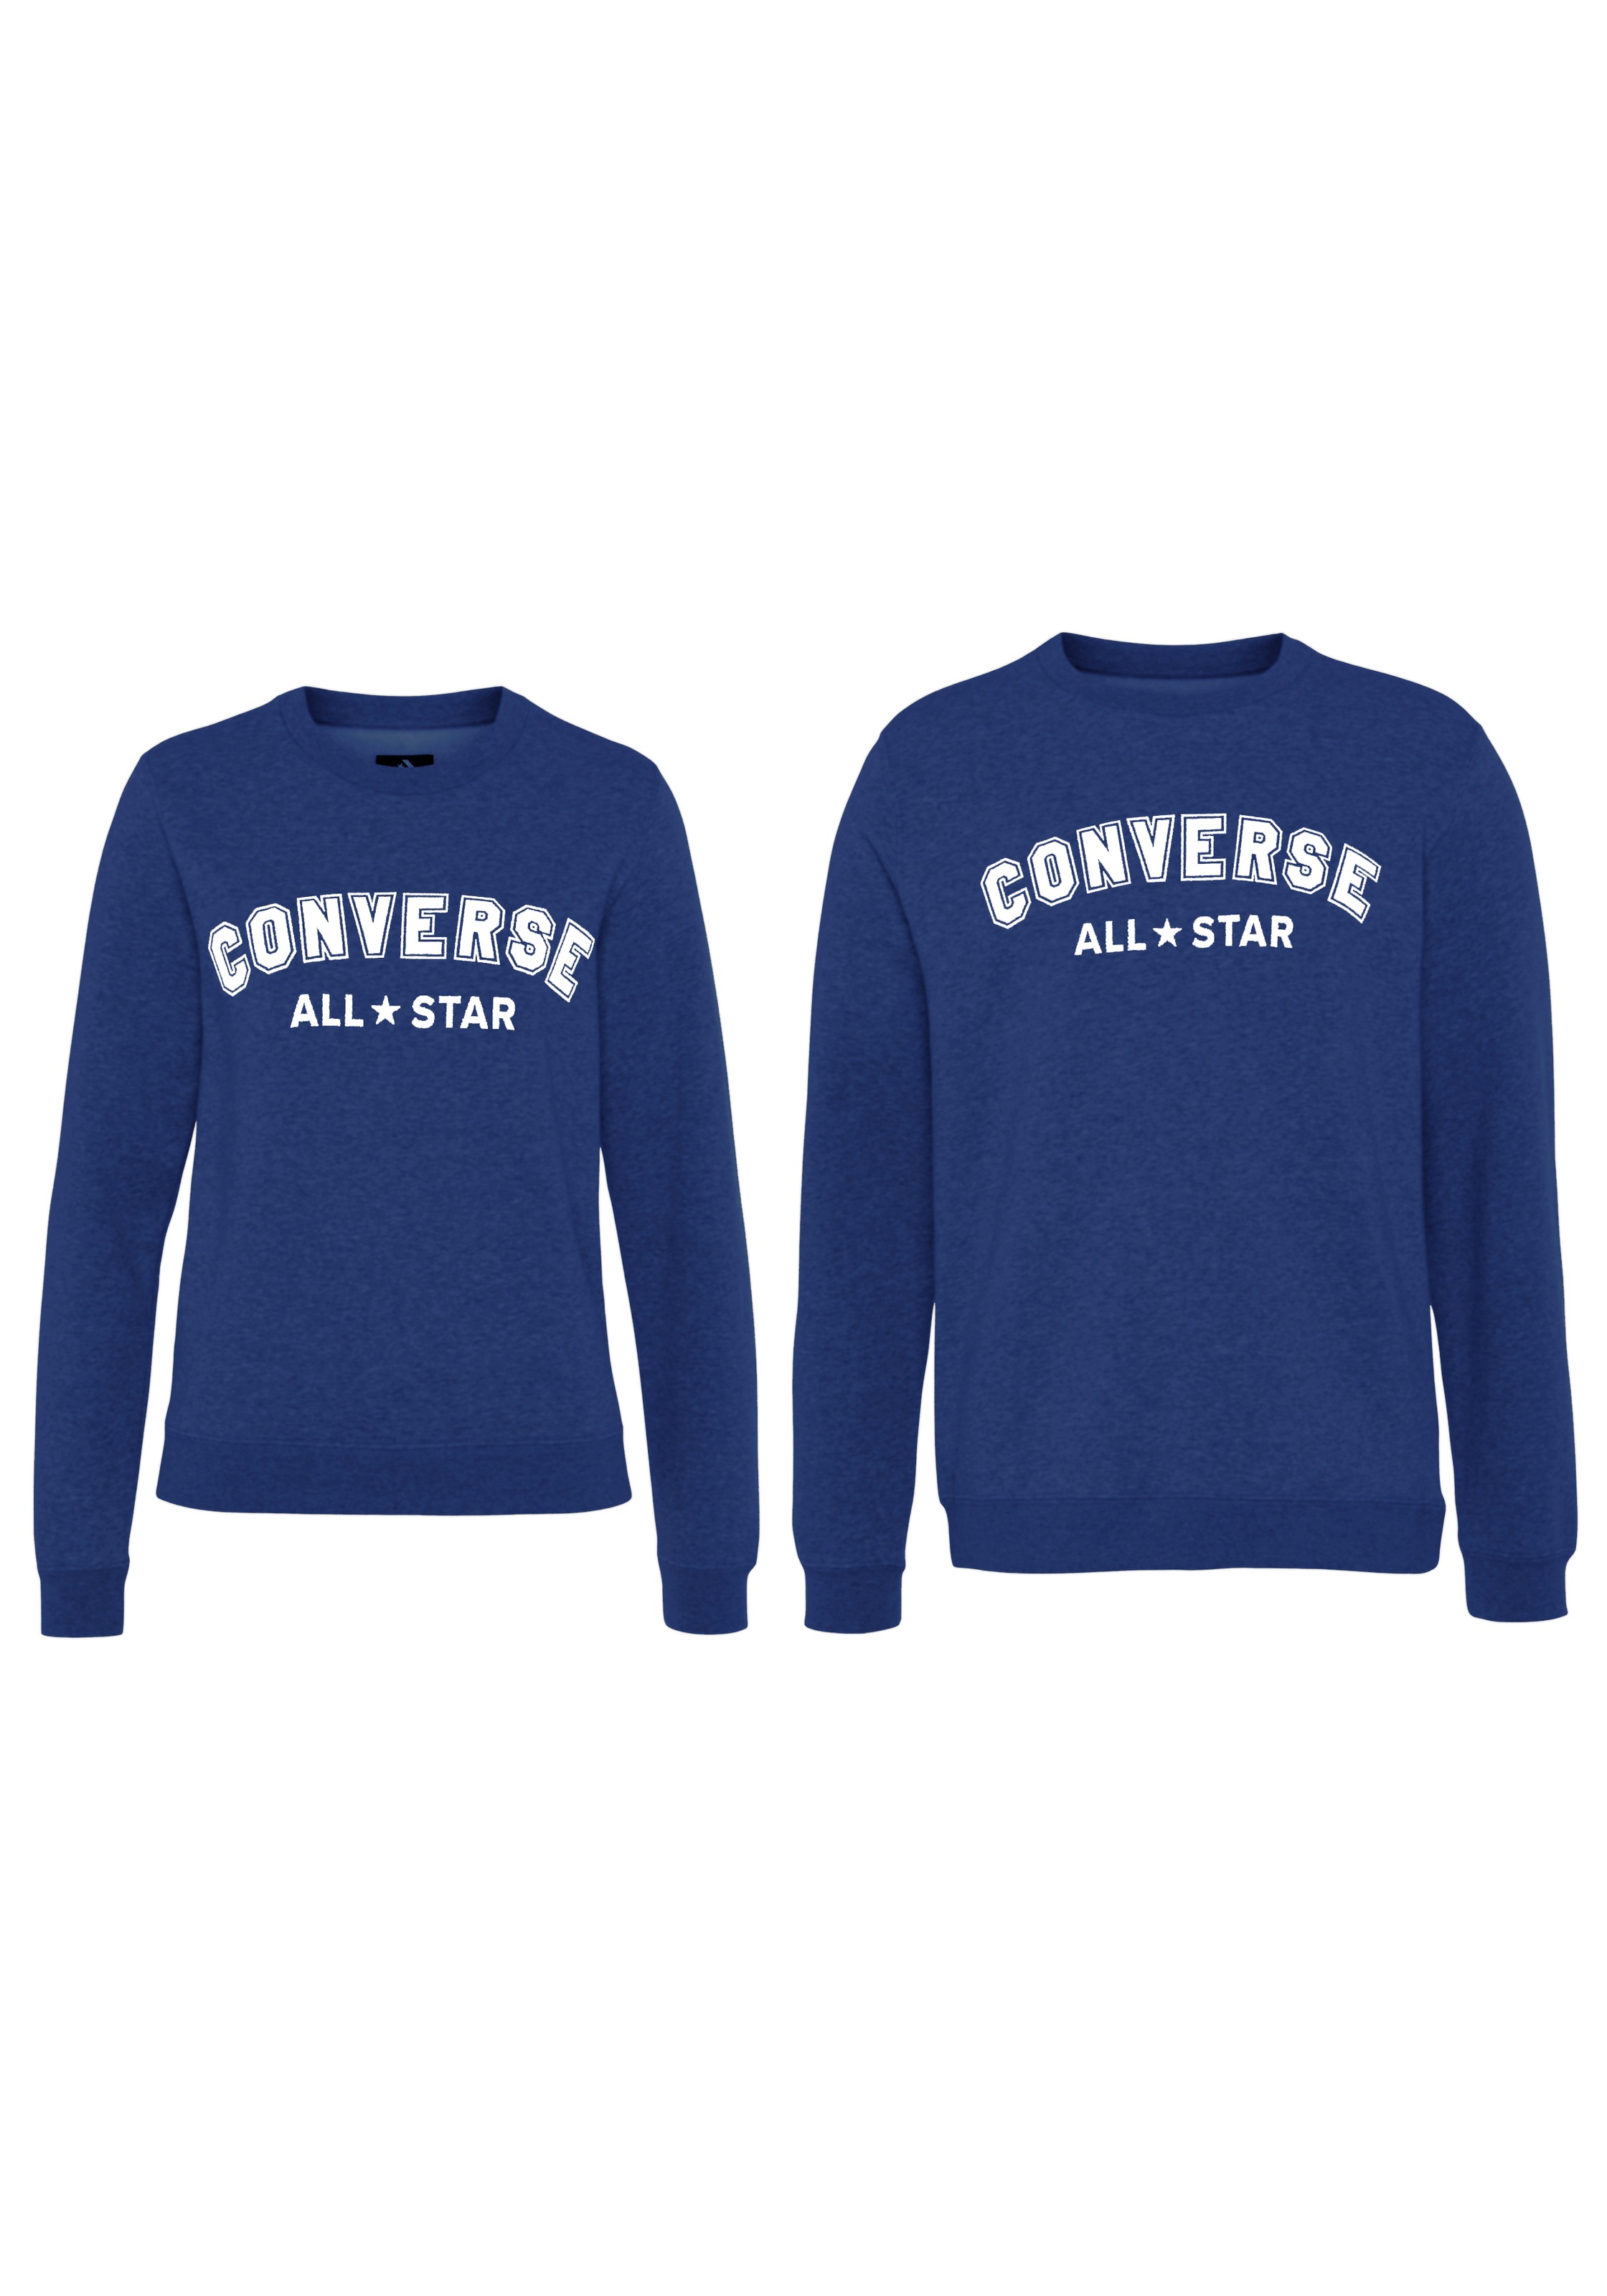 Converse grün OTTO Online | Shop